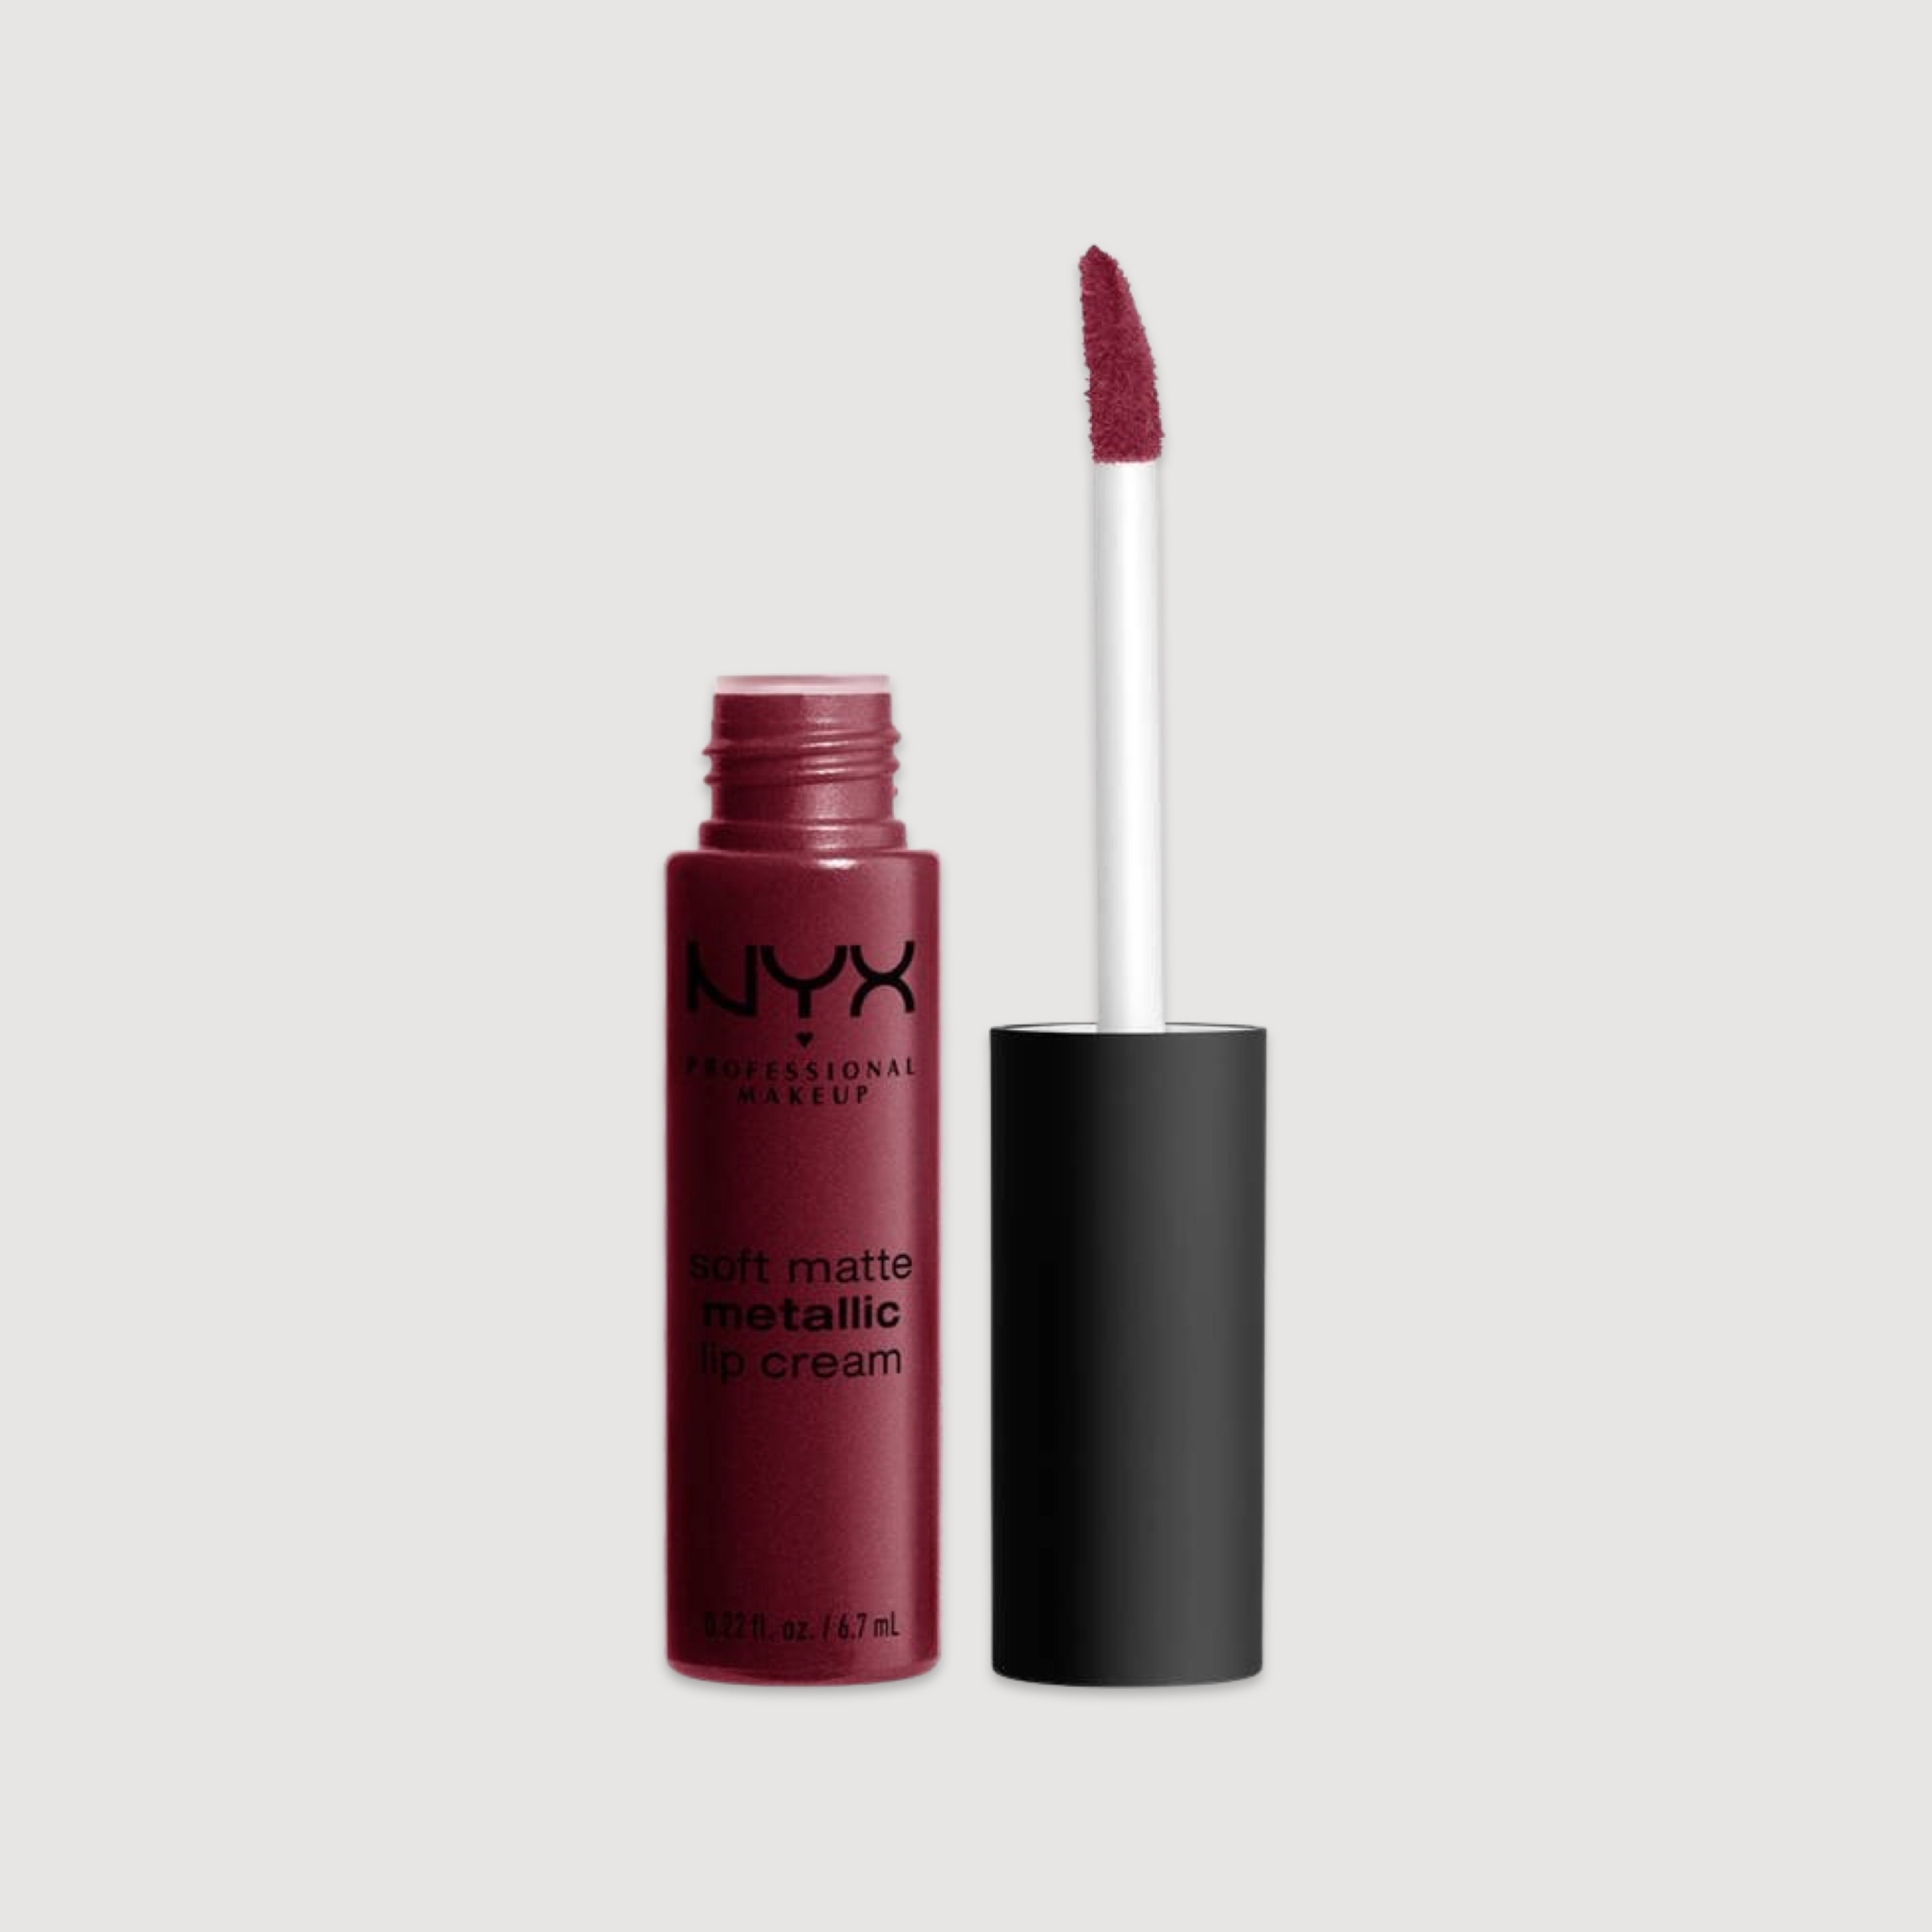 Nyx Soft Matte Metallic Lipstick